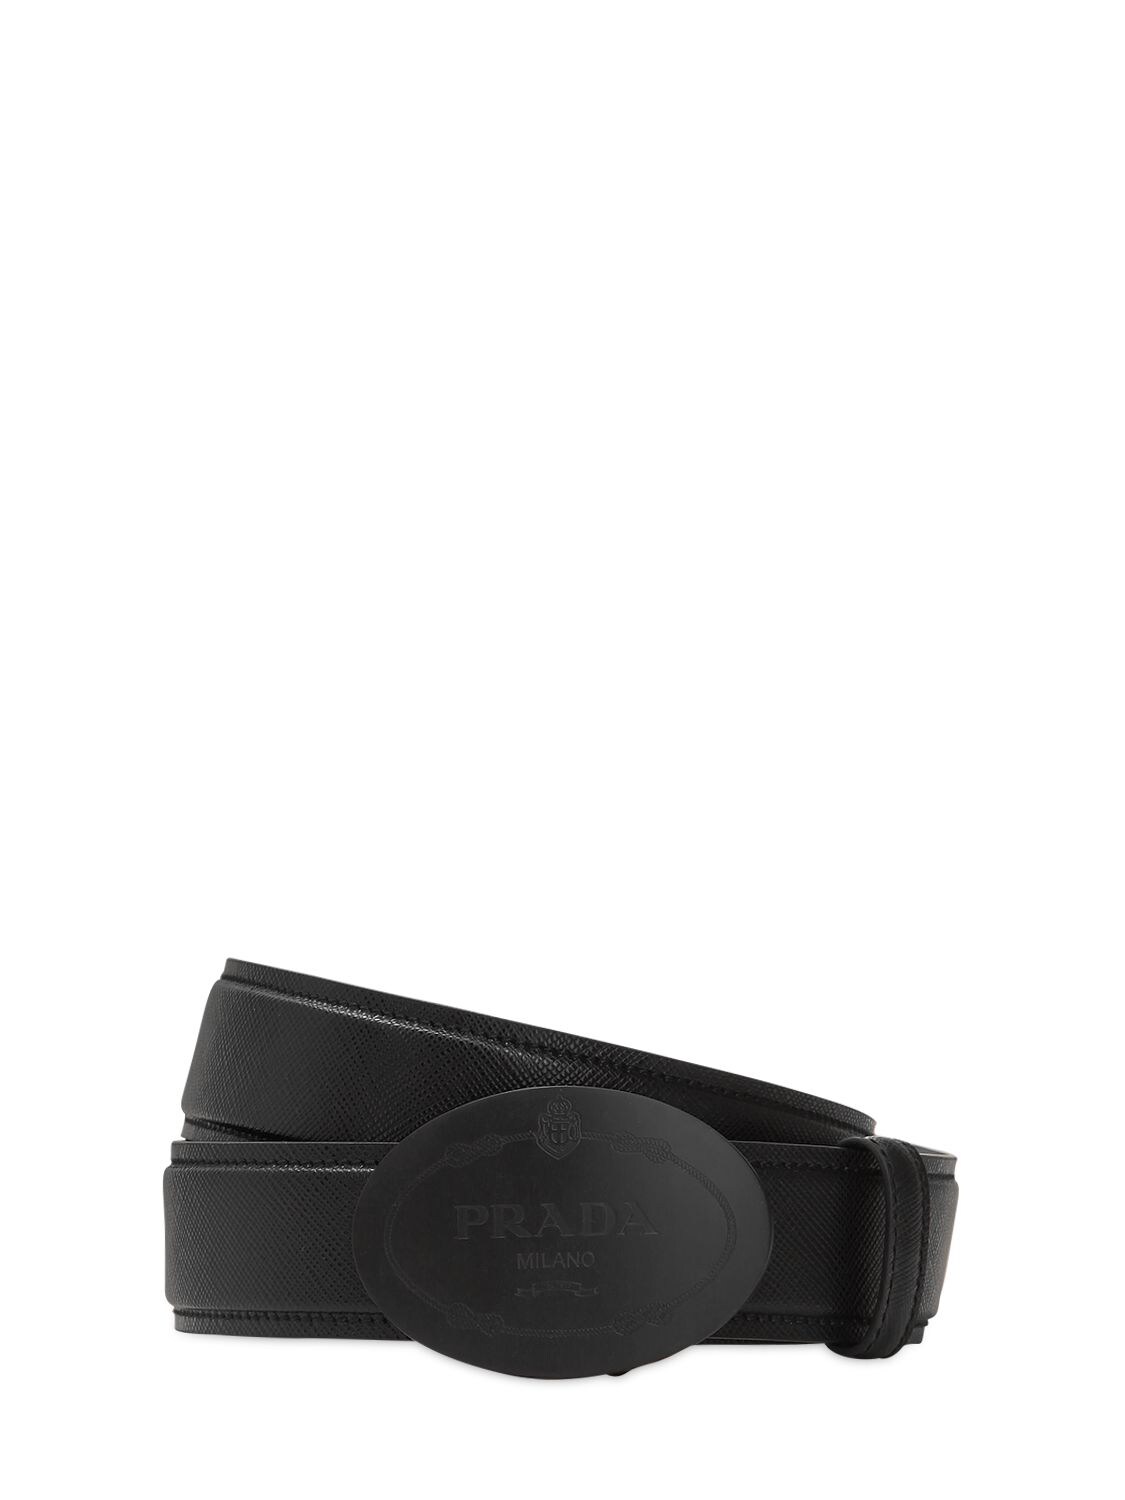 Prada Saffiano Leather Belt W/ Oval Buckle In Black